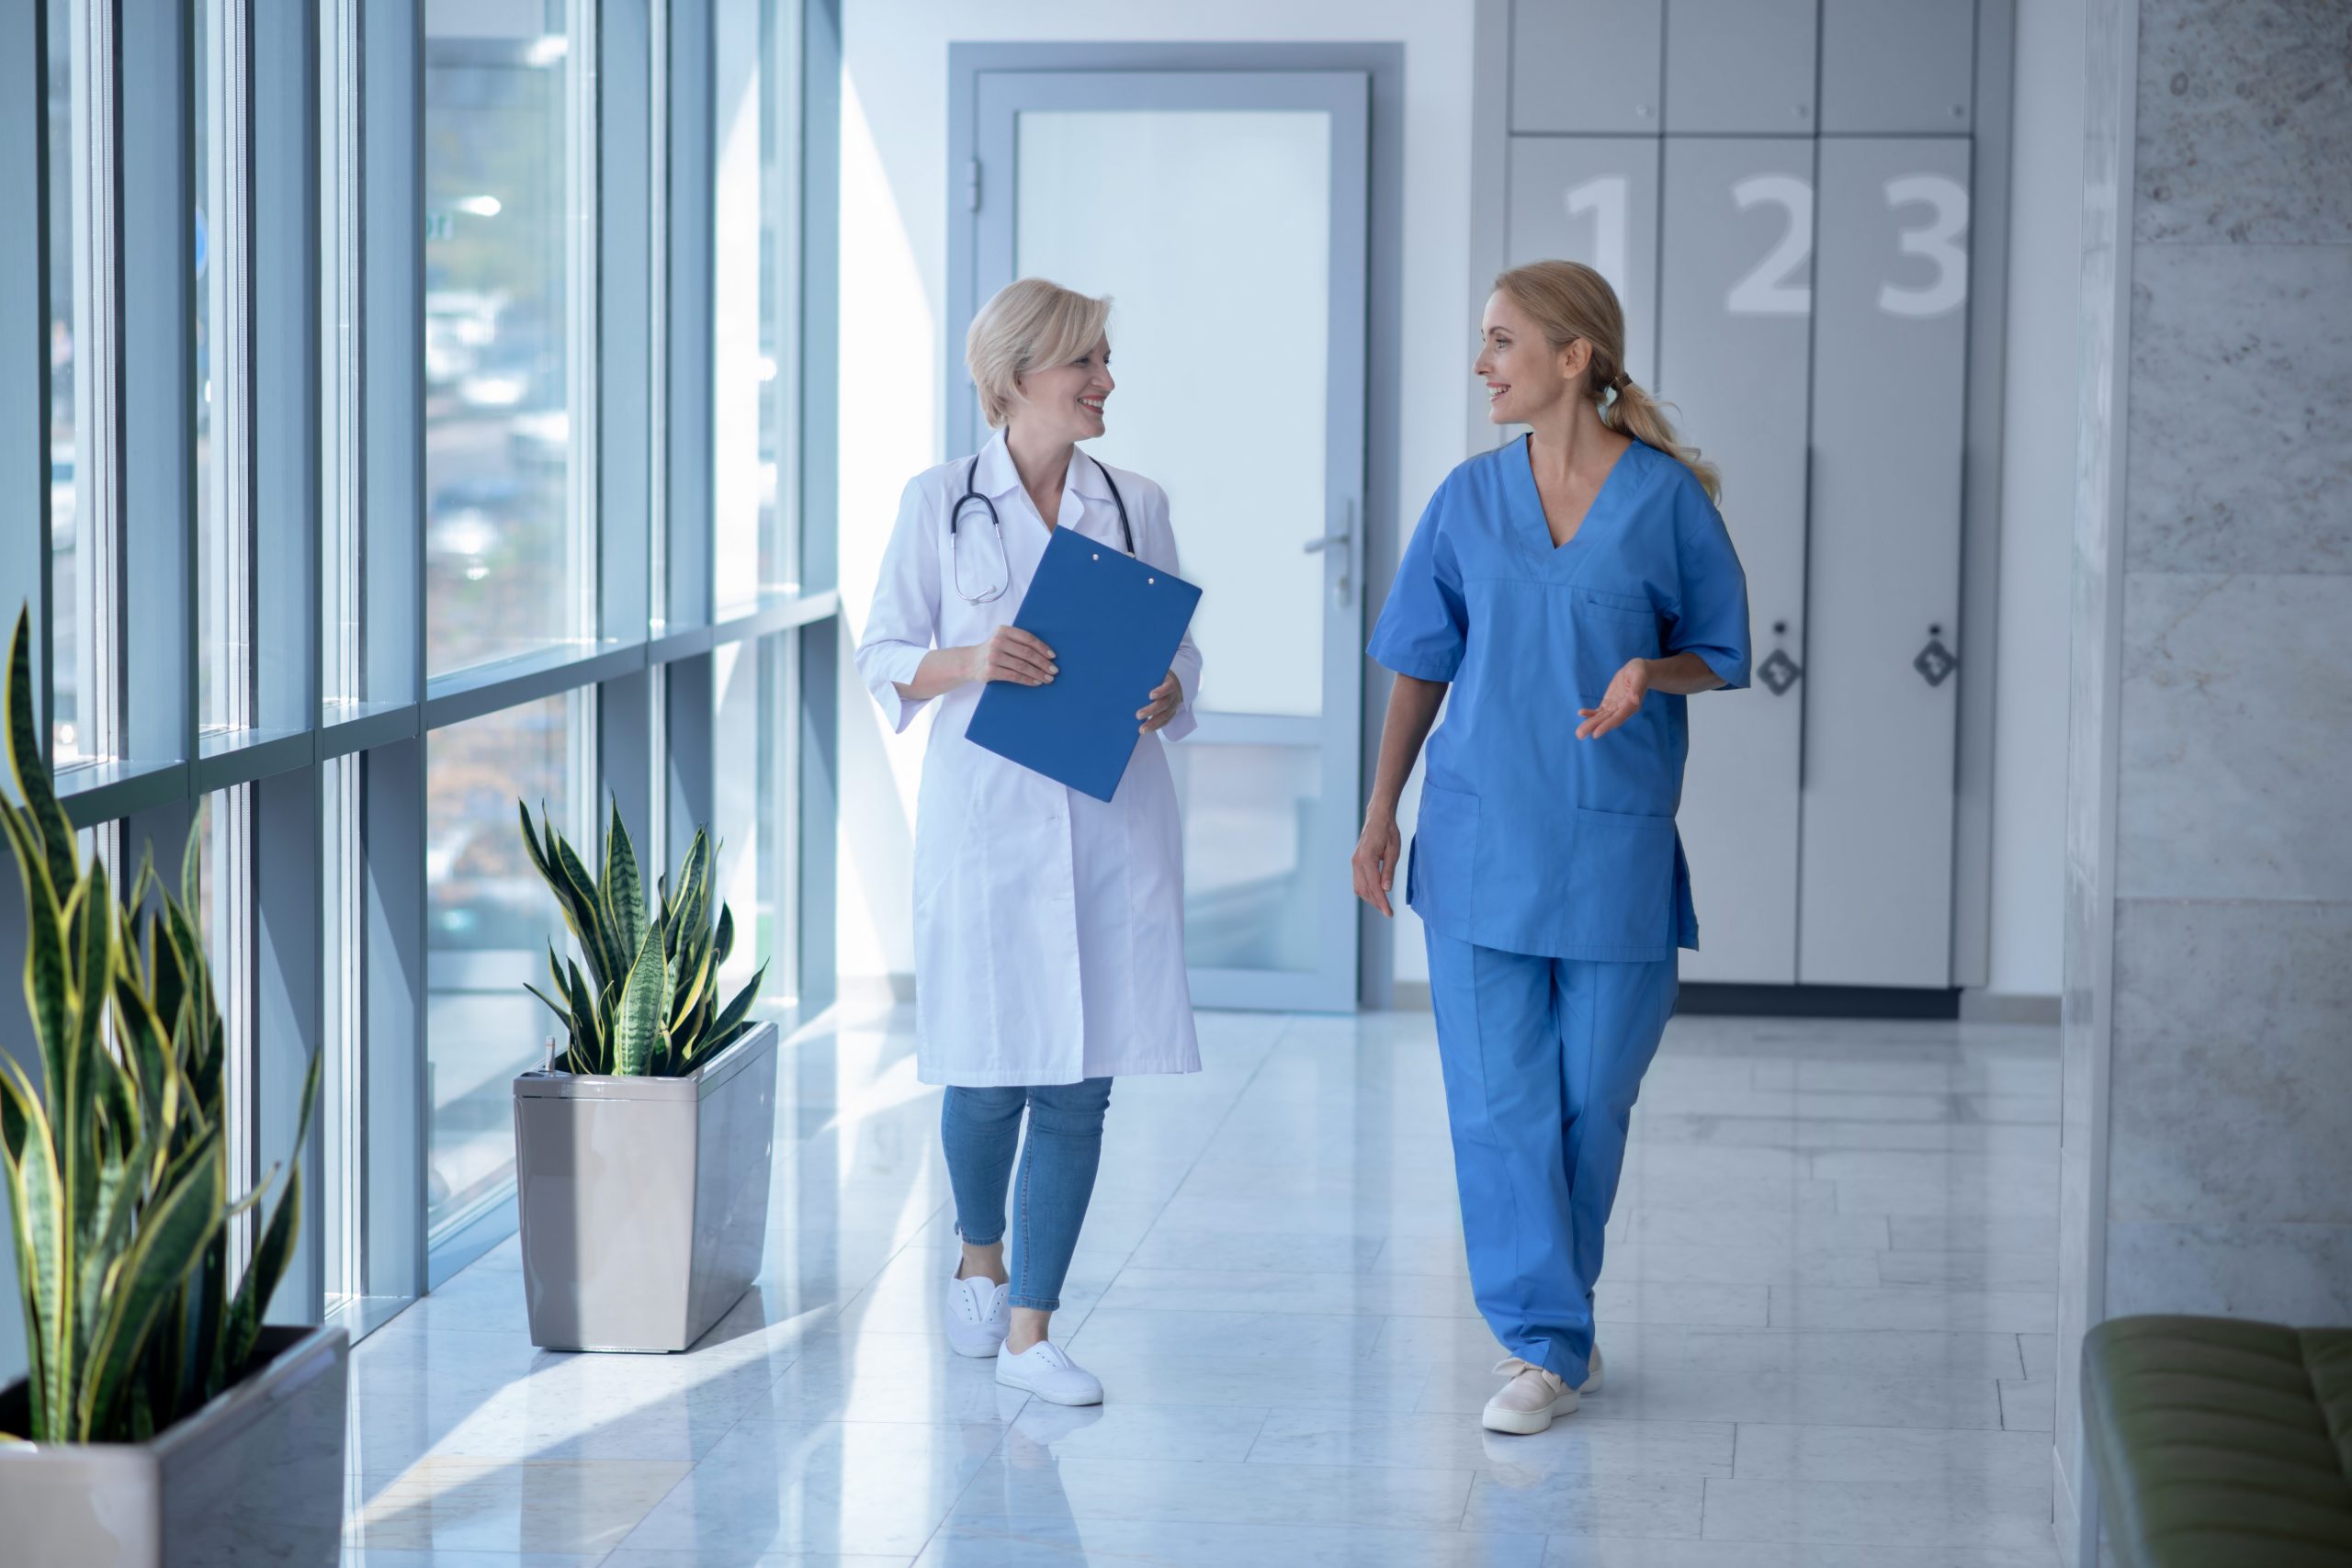 Two female doctors having friendly conversation, walking along hospital hallway